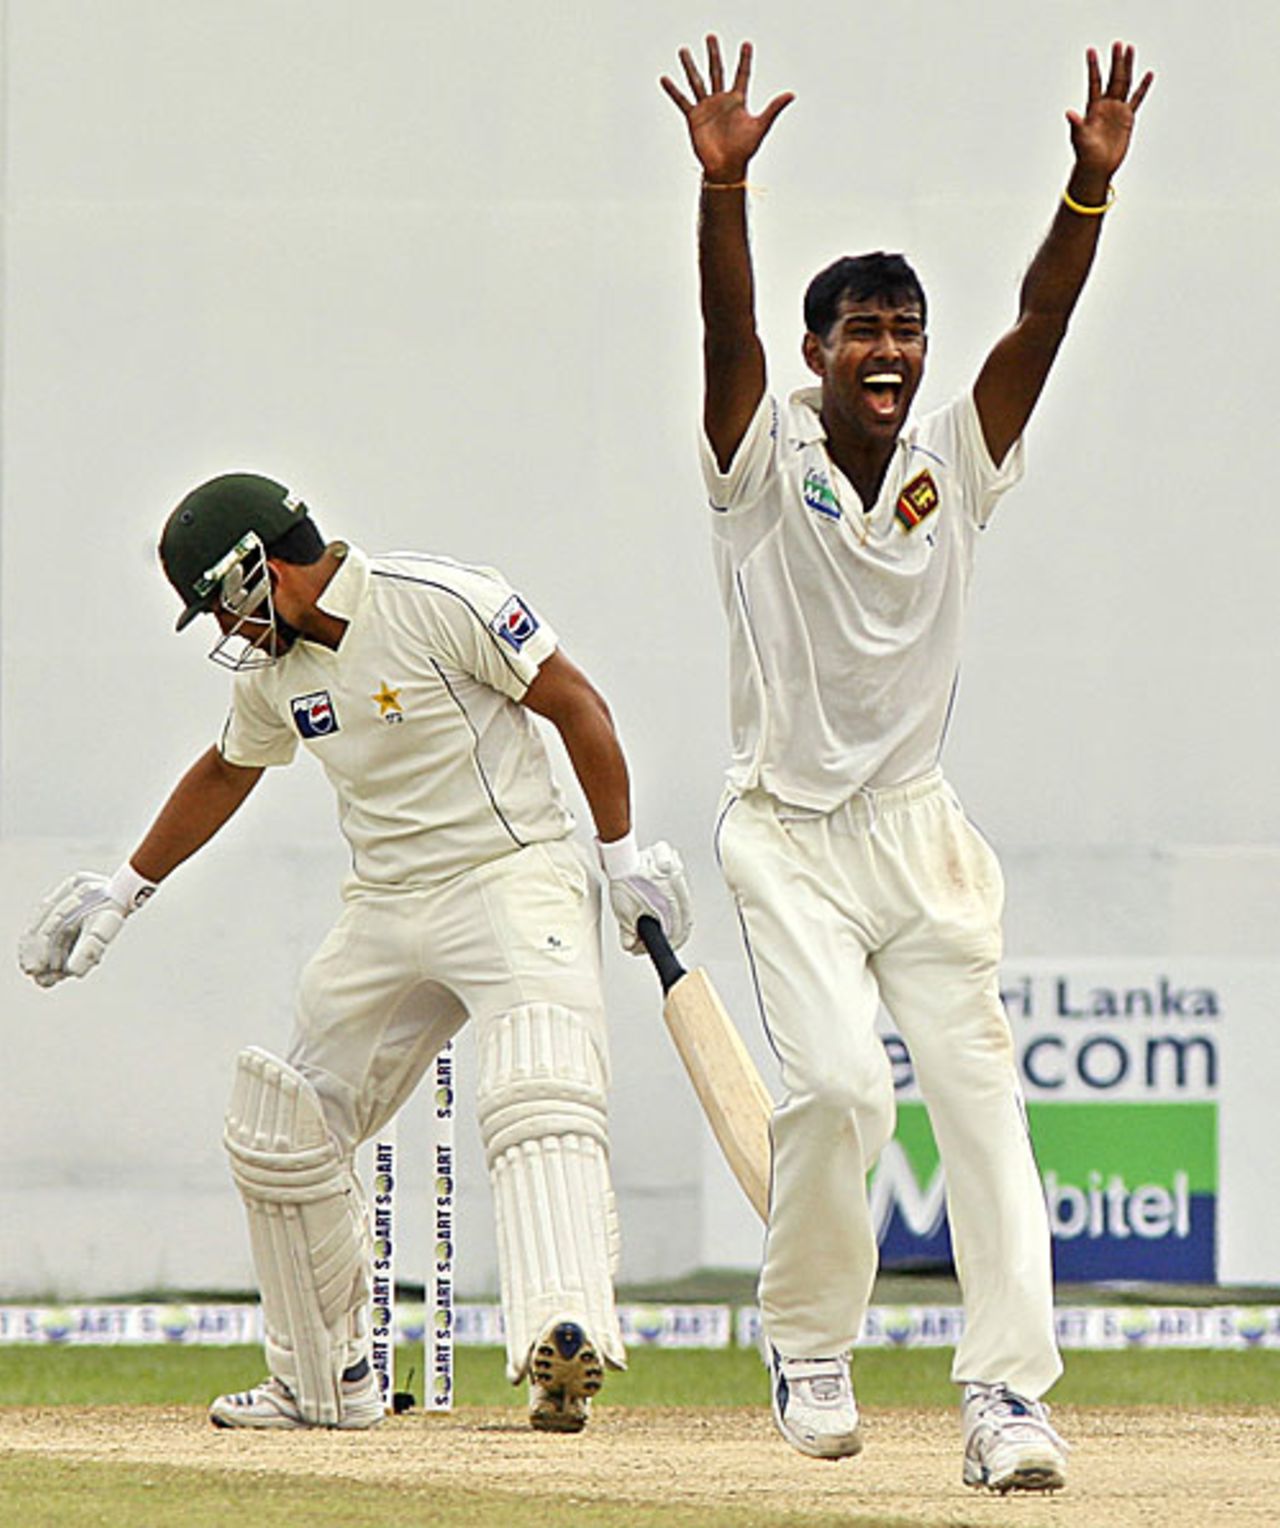 Nuwan Kulasekara traps Kamran Akmal in front, Sri Lanka v Pakistan, 2nd Test, Colombo, 3rd day, July 14, 2009 